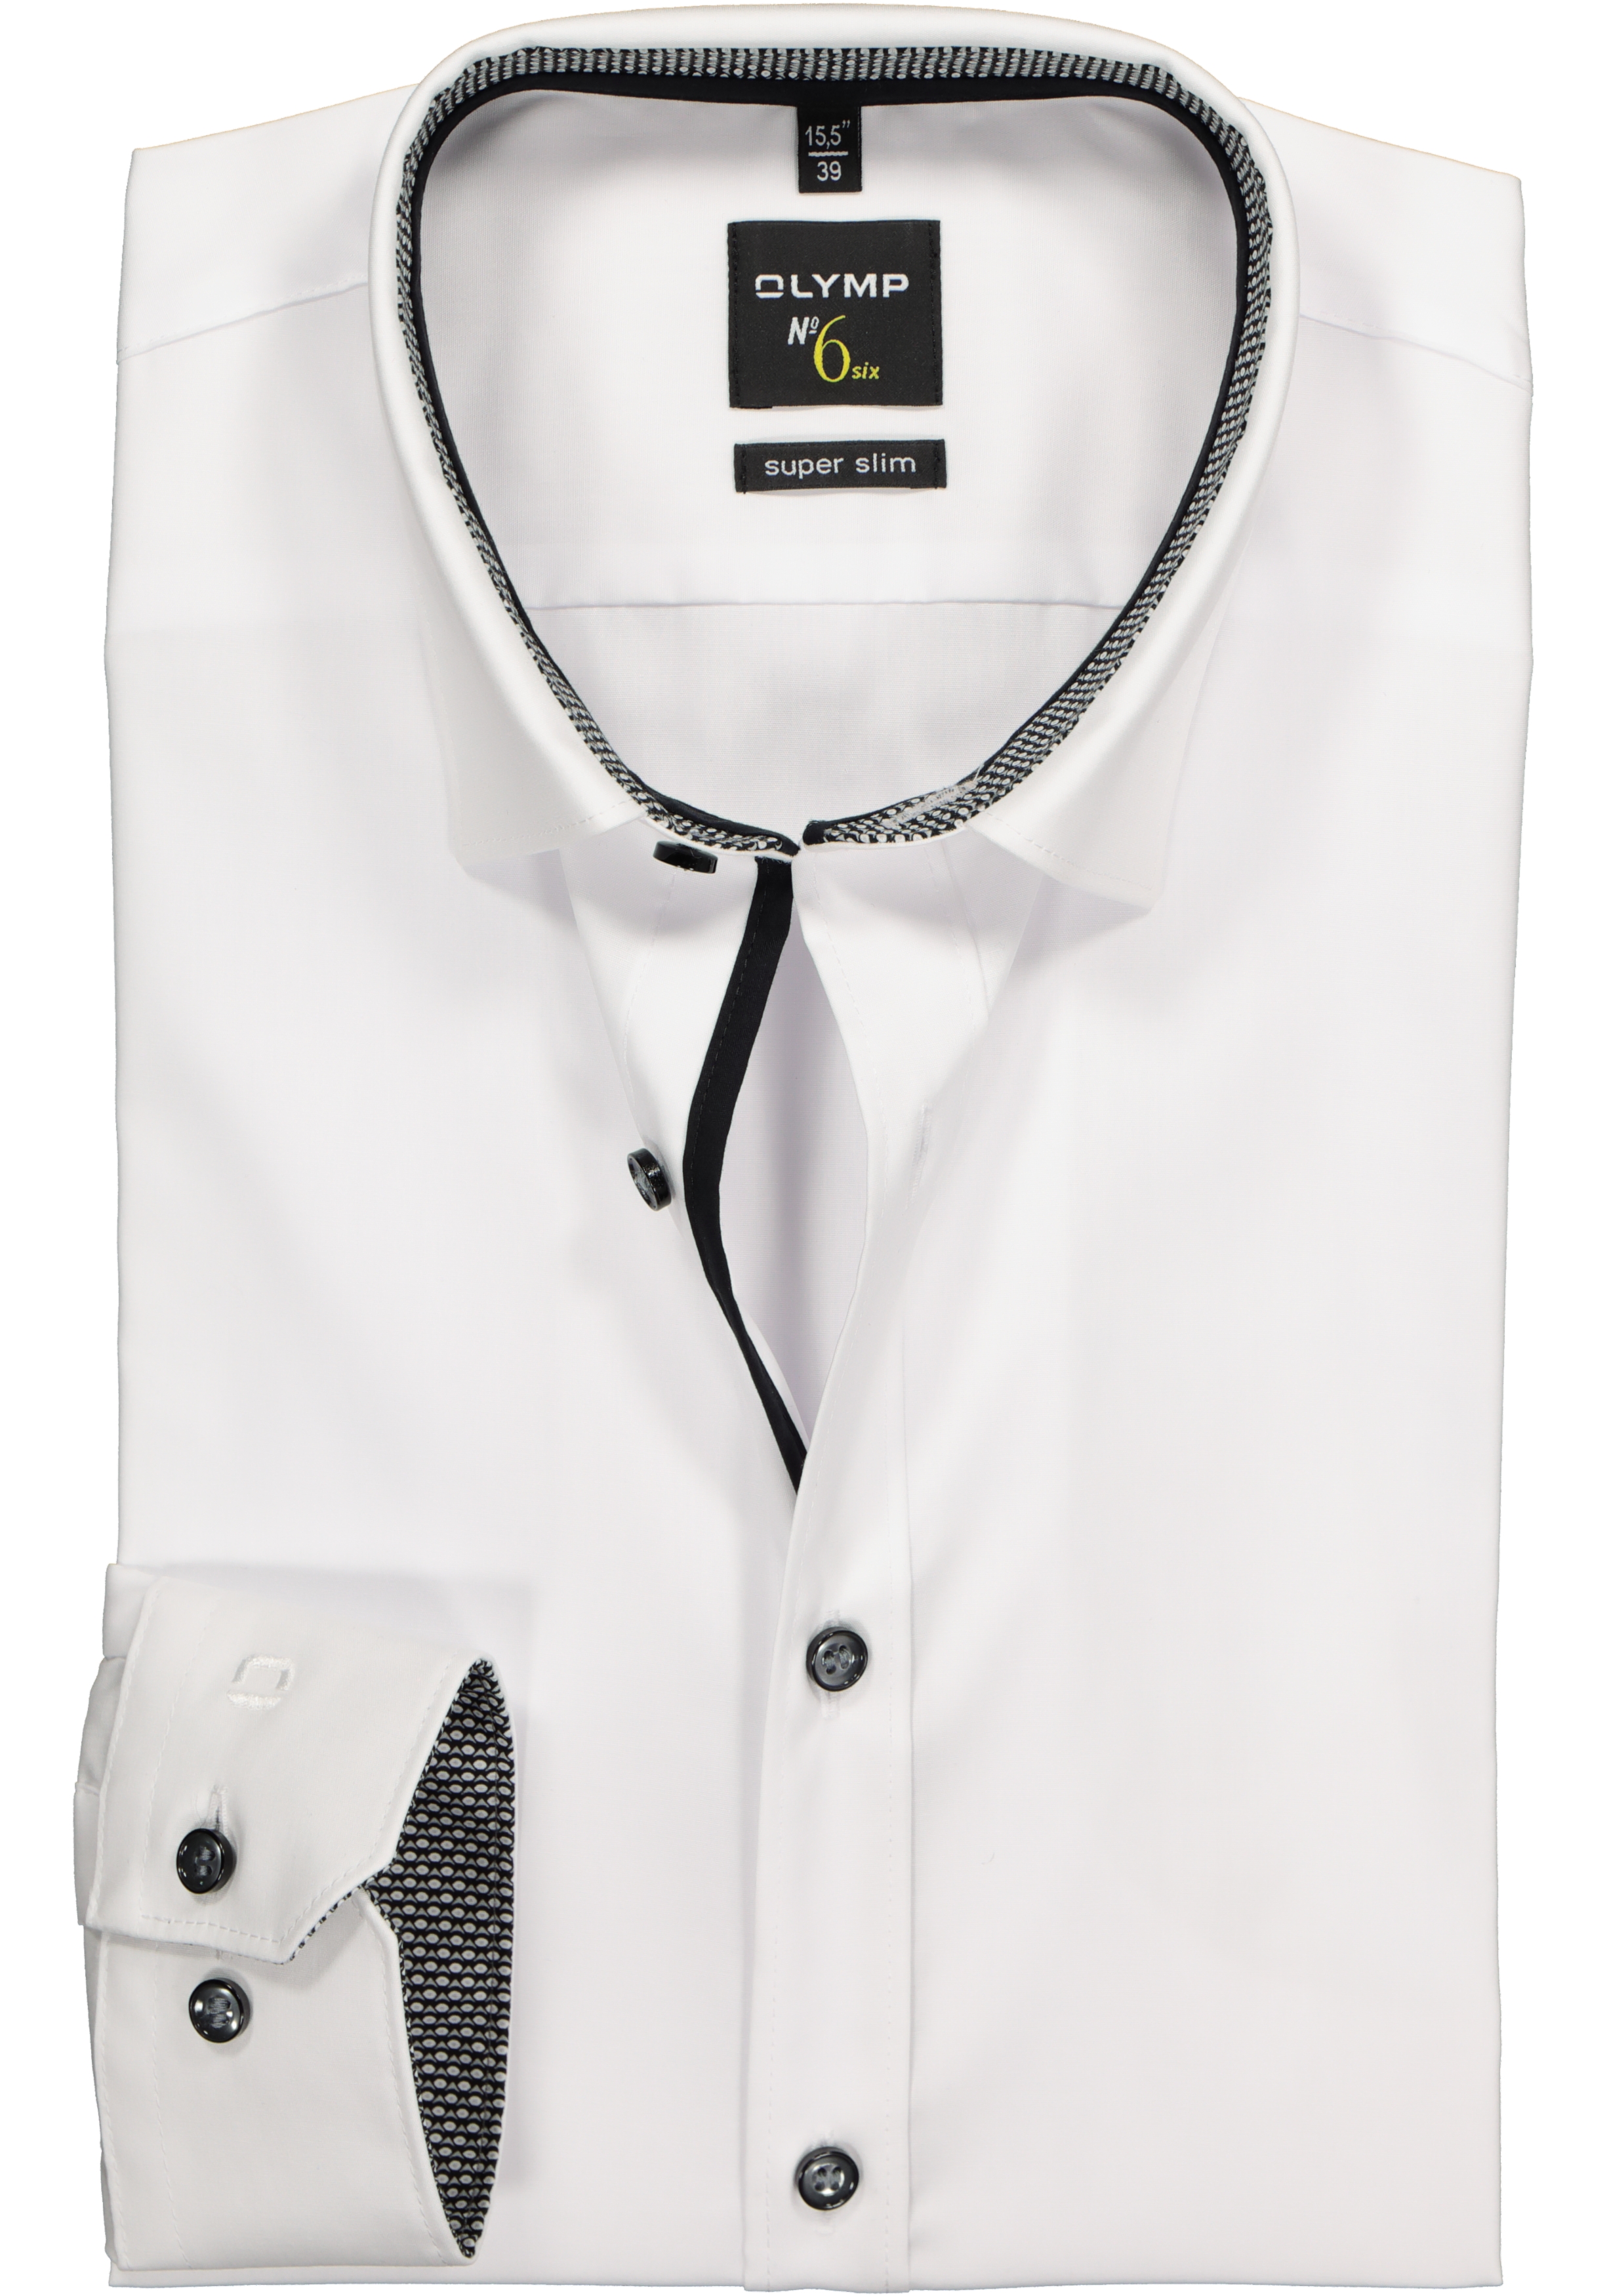 Zeug koppeling Teleurgesteld OLYMP No. Six super slim fit overhemd, wit (zwart contrast) - Zomer SALE  tot 70% korting